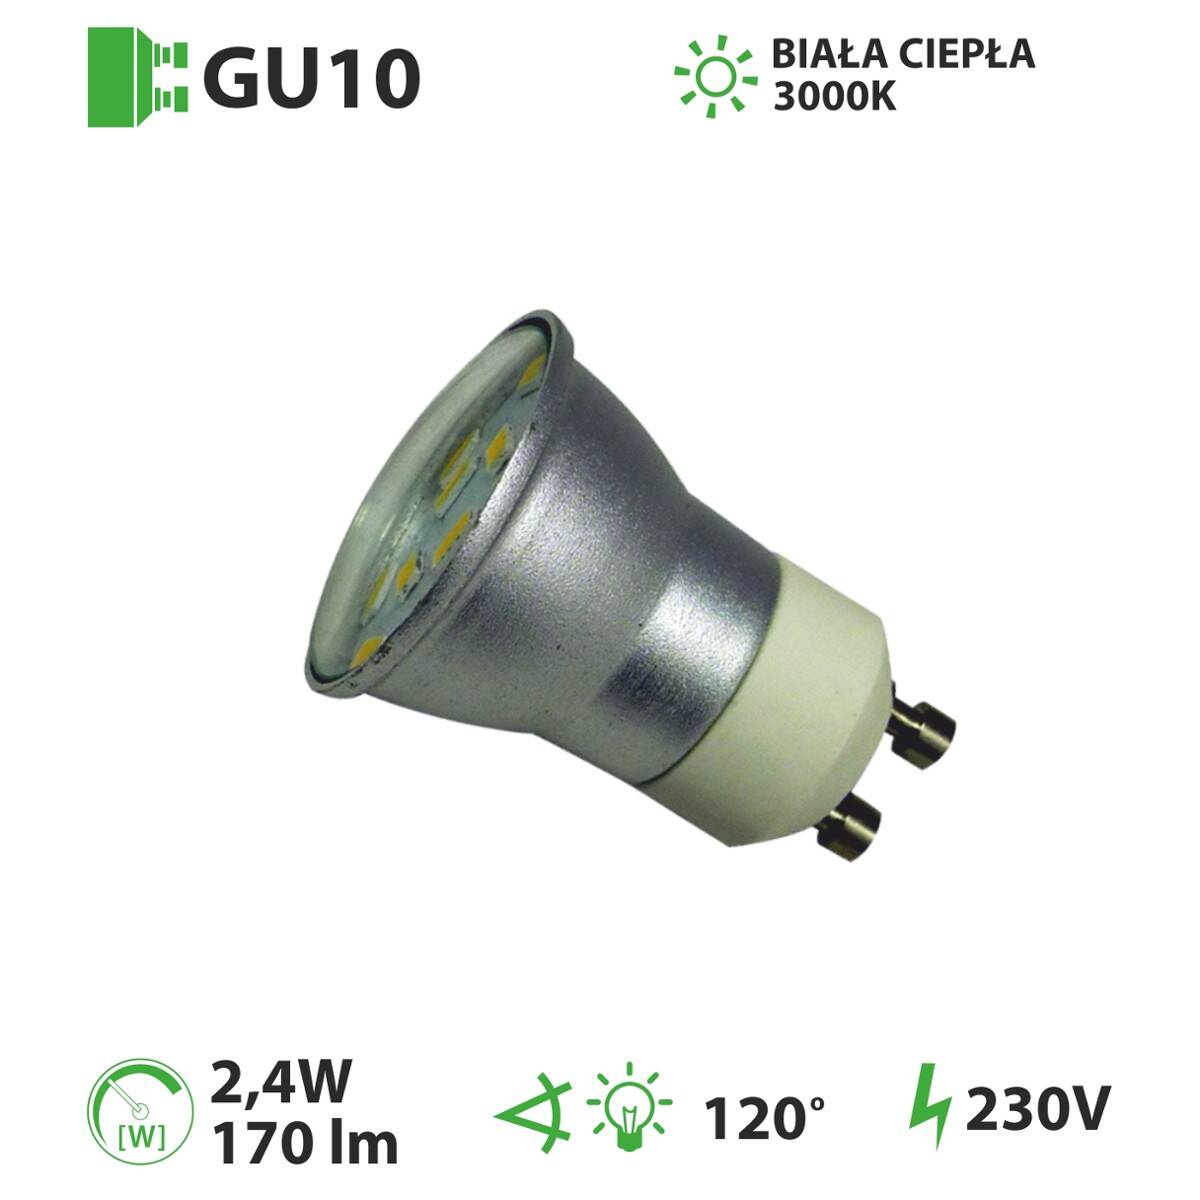 LED bulb SMD 5730 MR11 GU10 230V 2,4W  - warm white